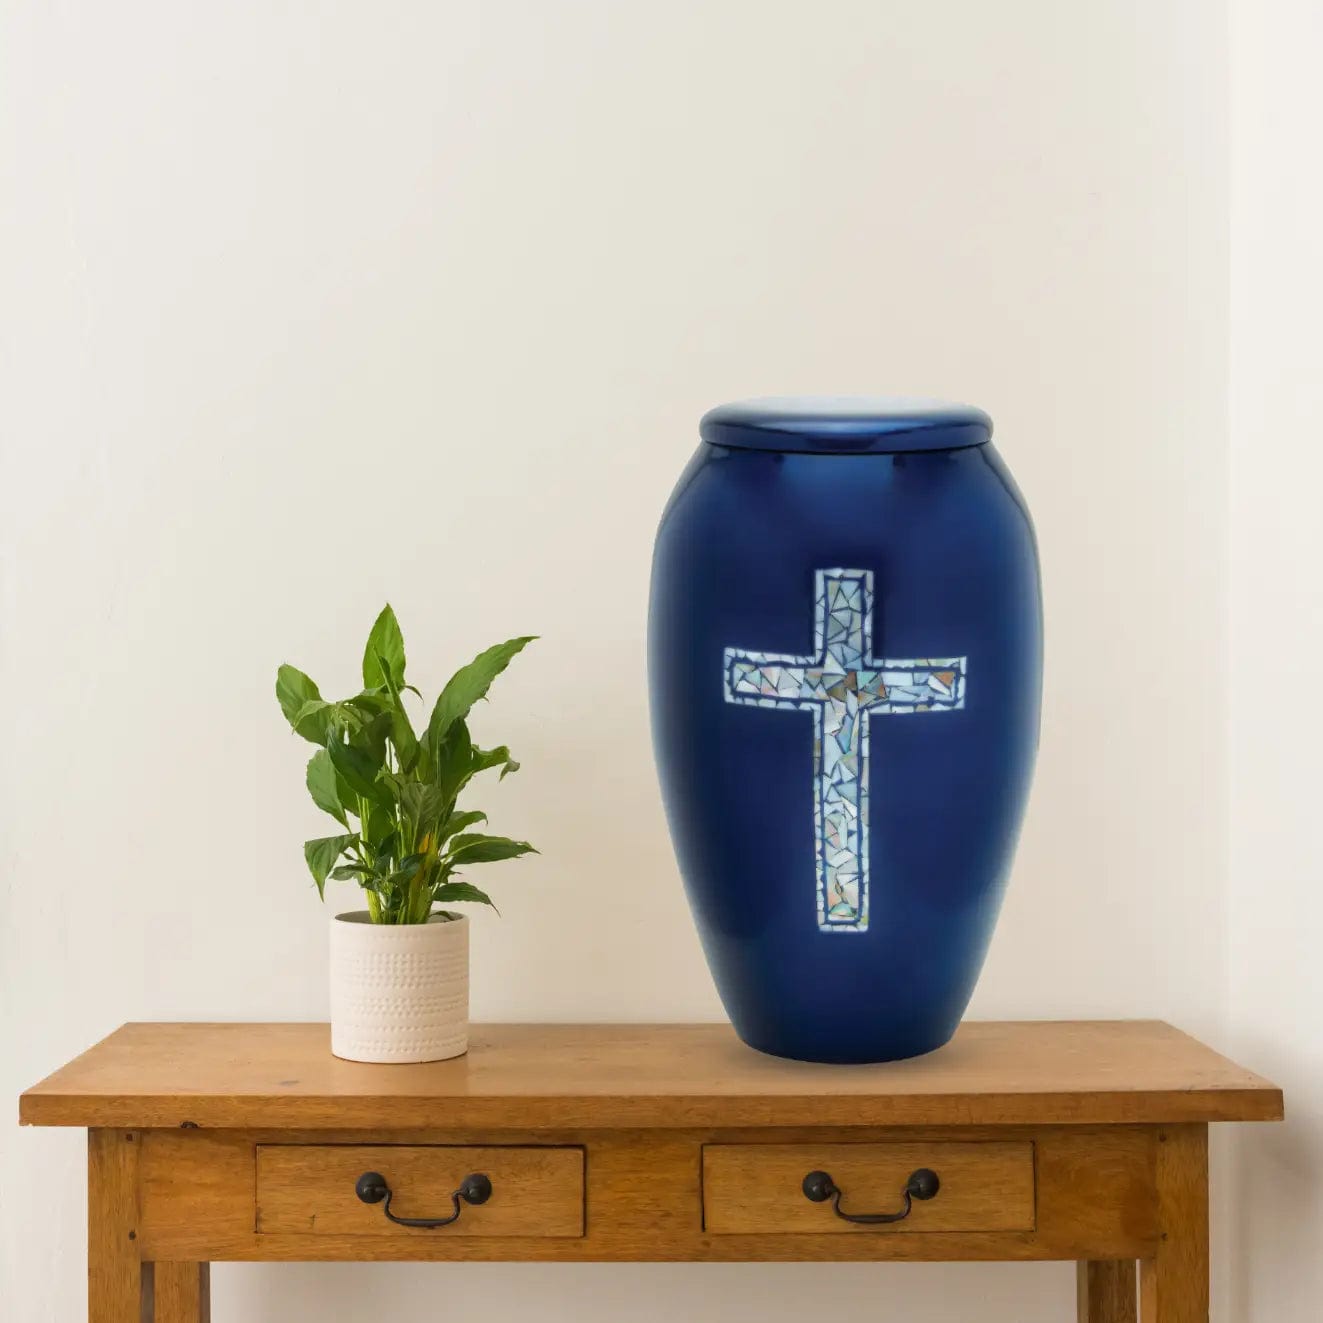 Designer Urn - Blue Cross